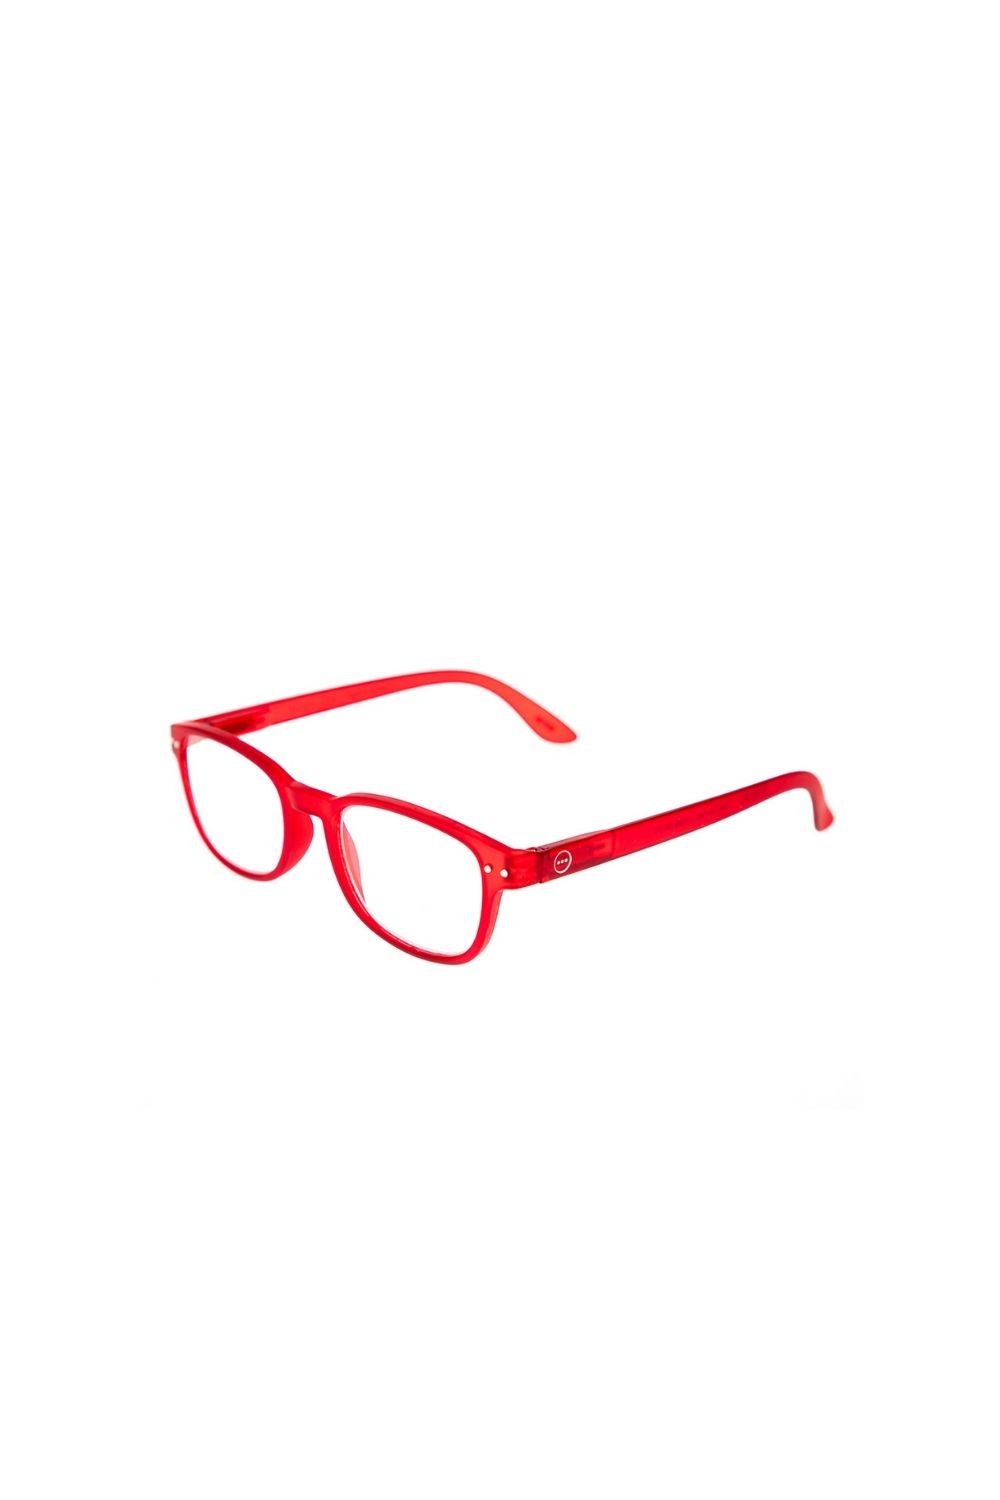 IZIPIZI – Unisex γυαλιά οράσεως IZIPIZI SHF COL READING #B κόκκινα 1652851.0-0044